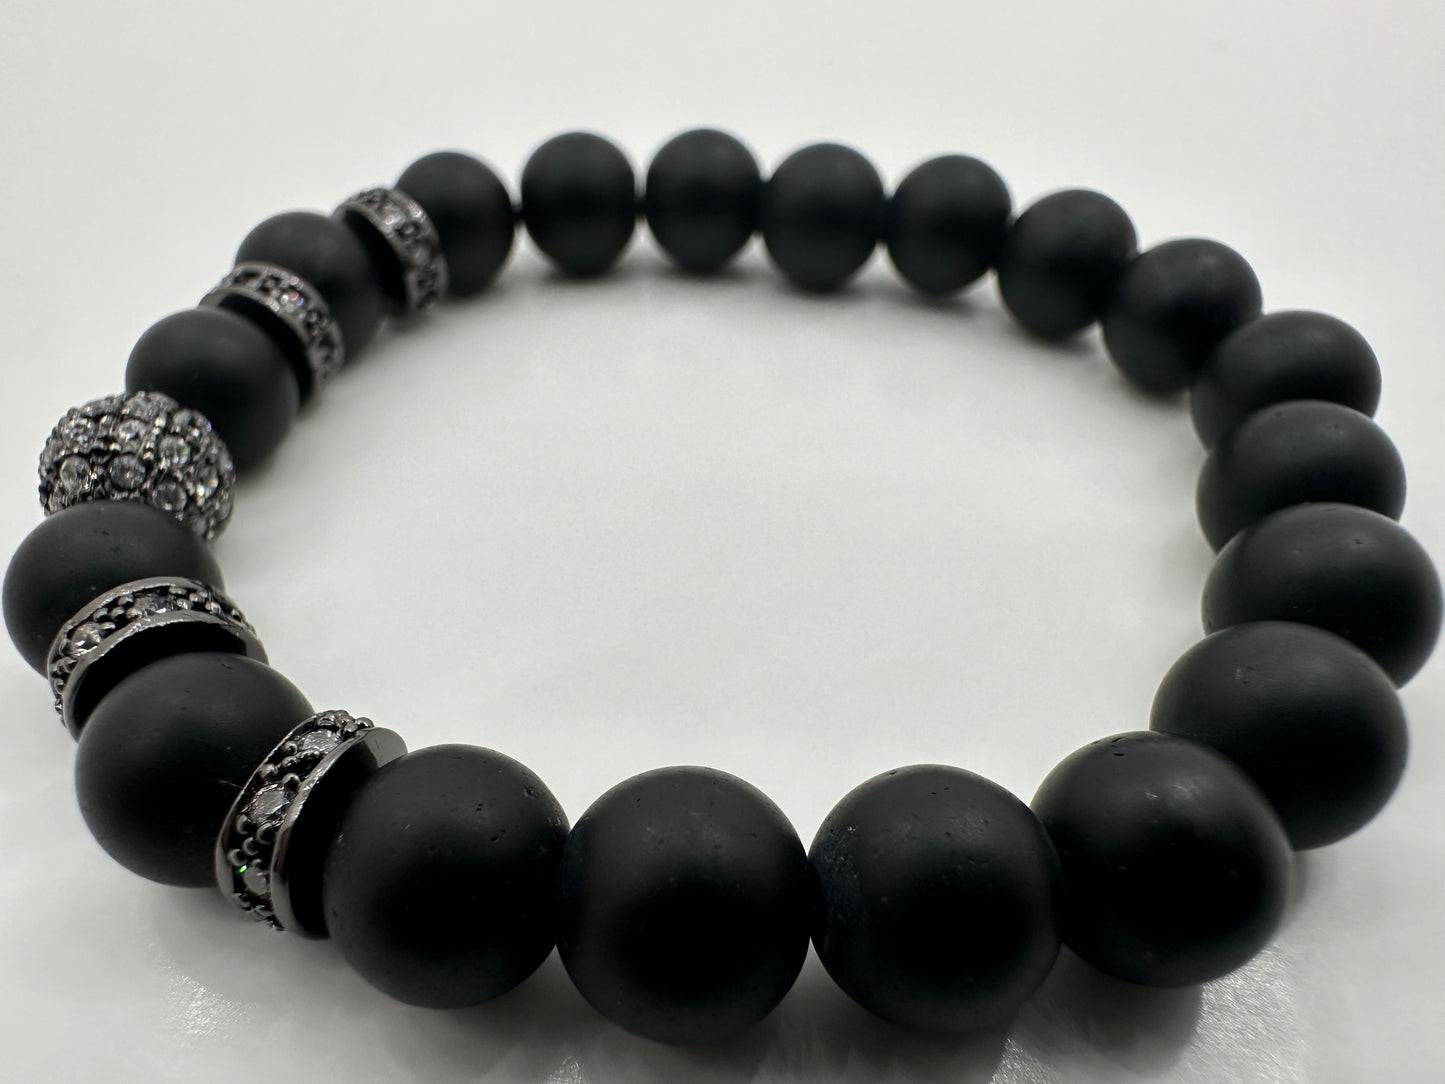 Matte Black Onyx and Pave Rhinestone Accents Gemstone Bracelet Size 6.5 inch